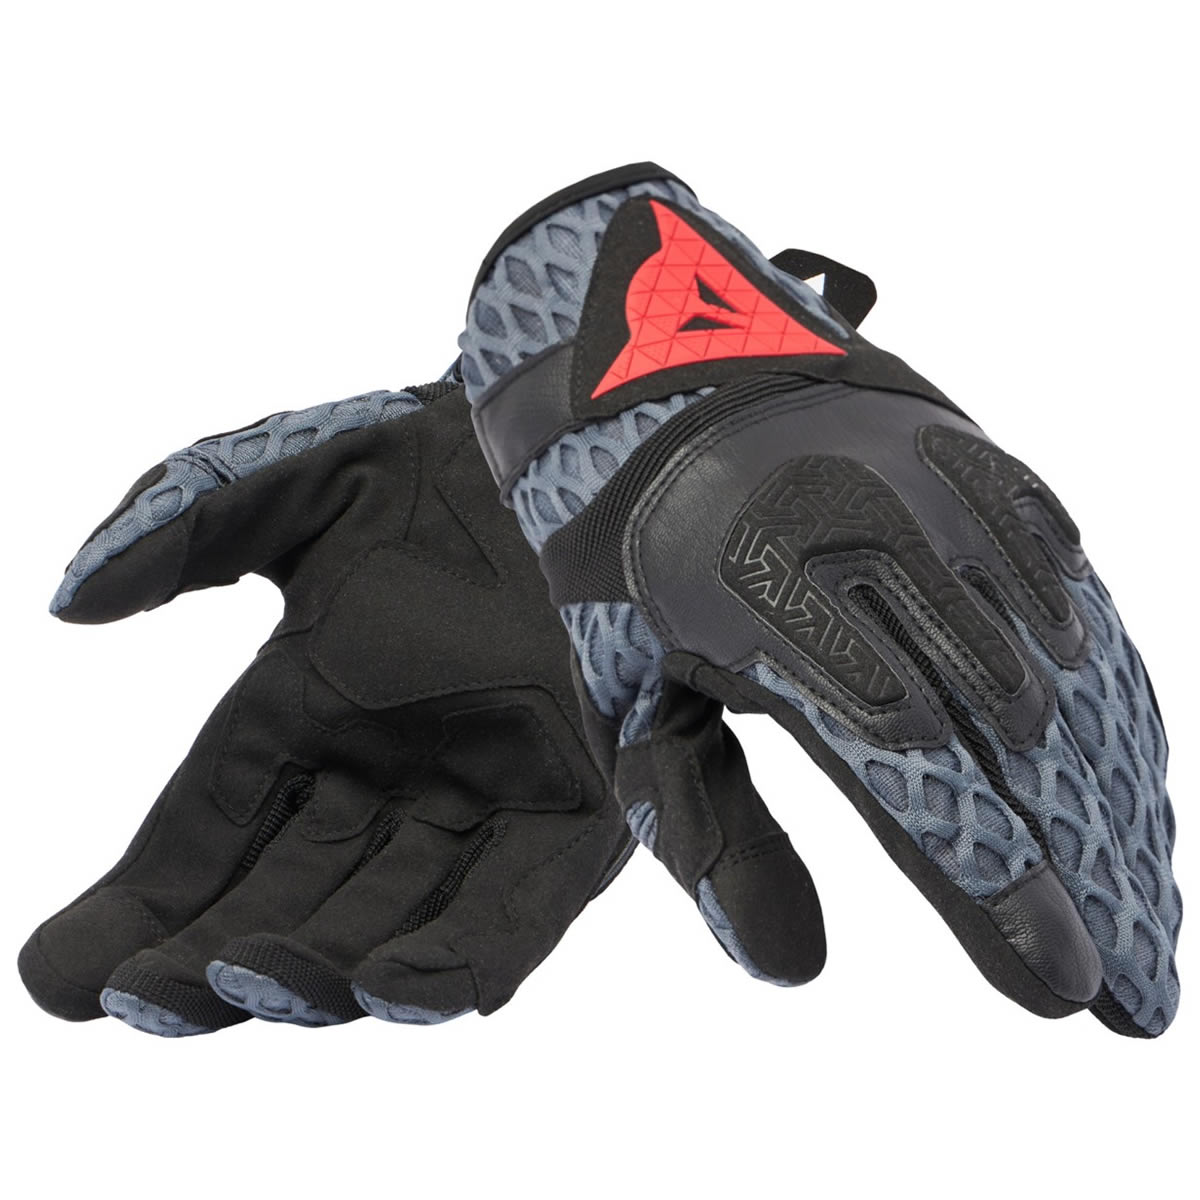 Dainese Handschuhe Air-Maze, schwarz-grau